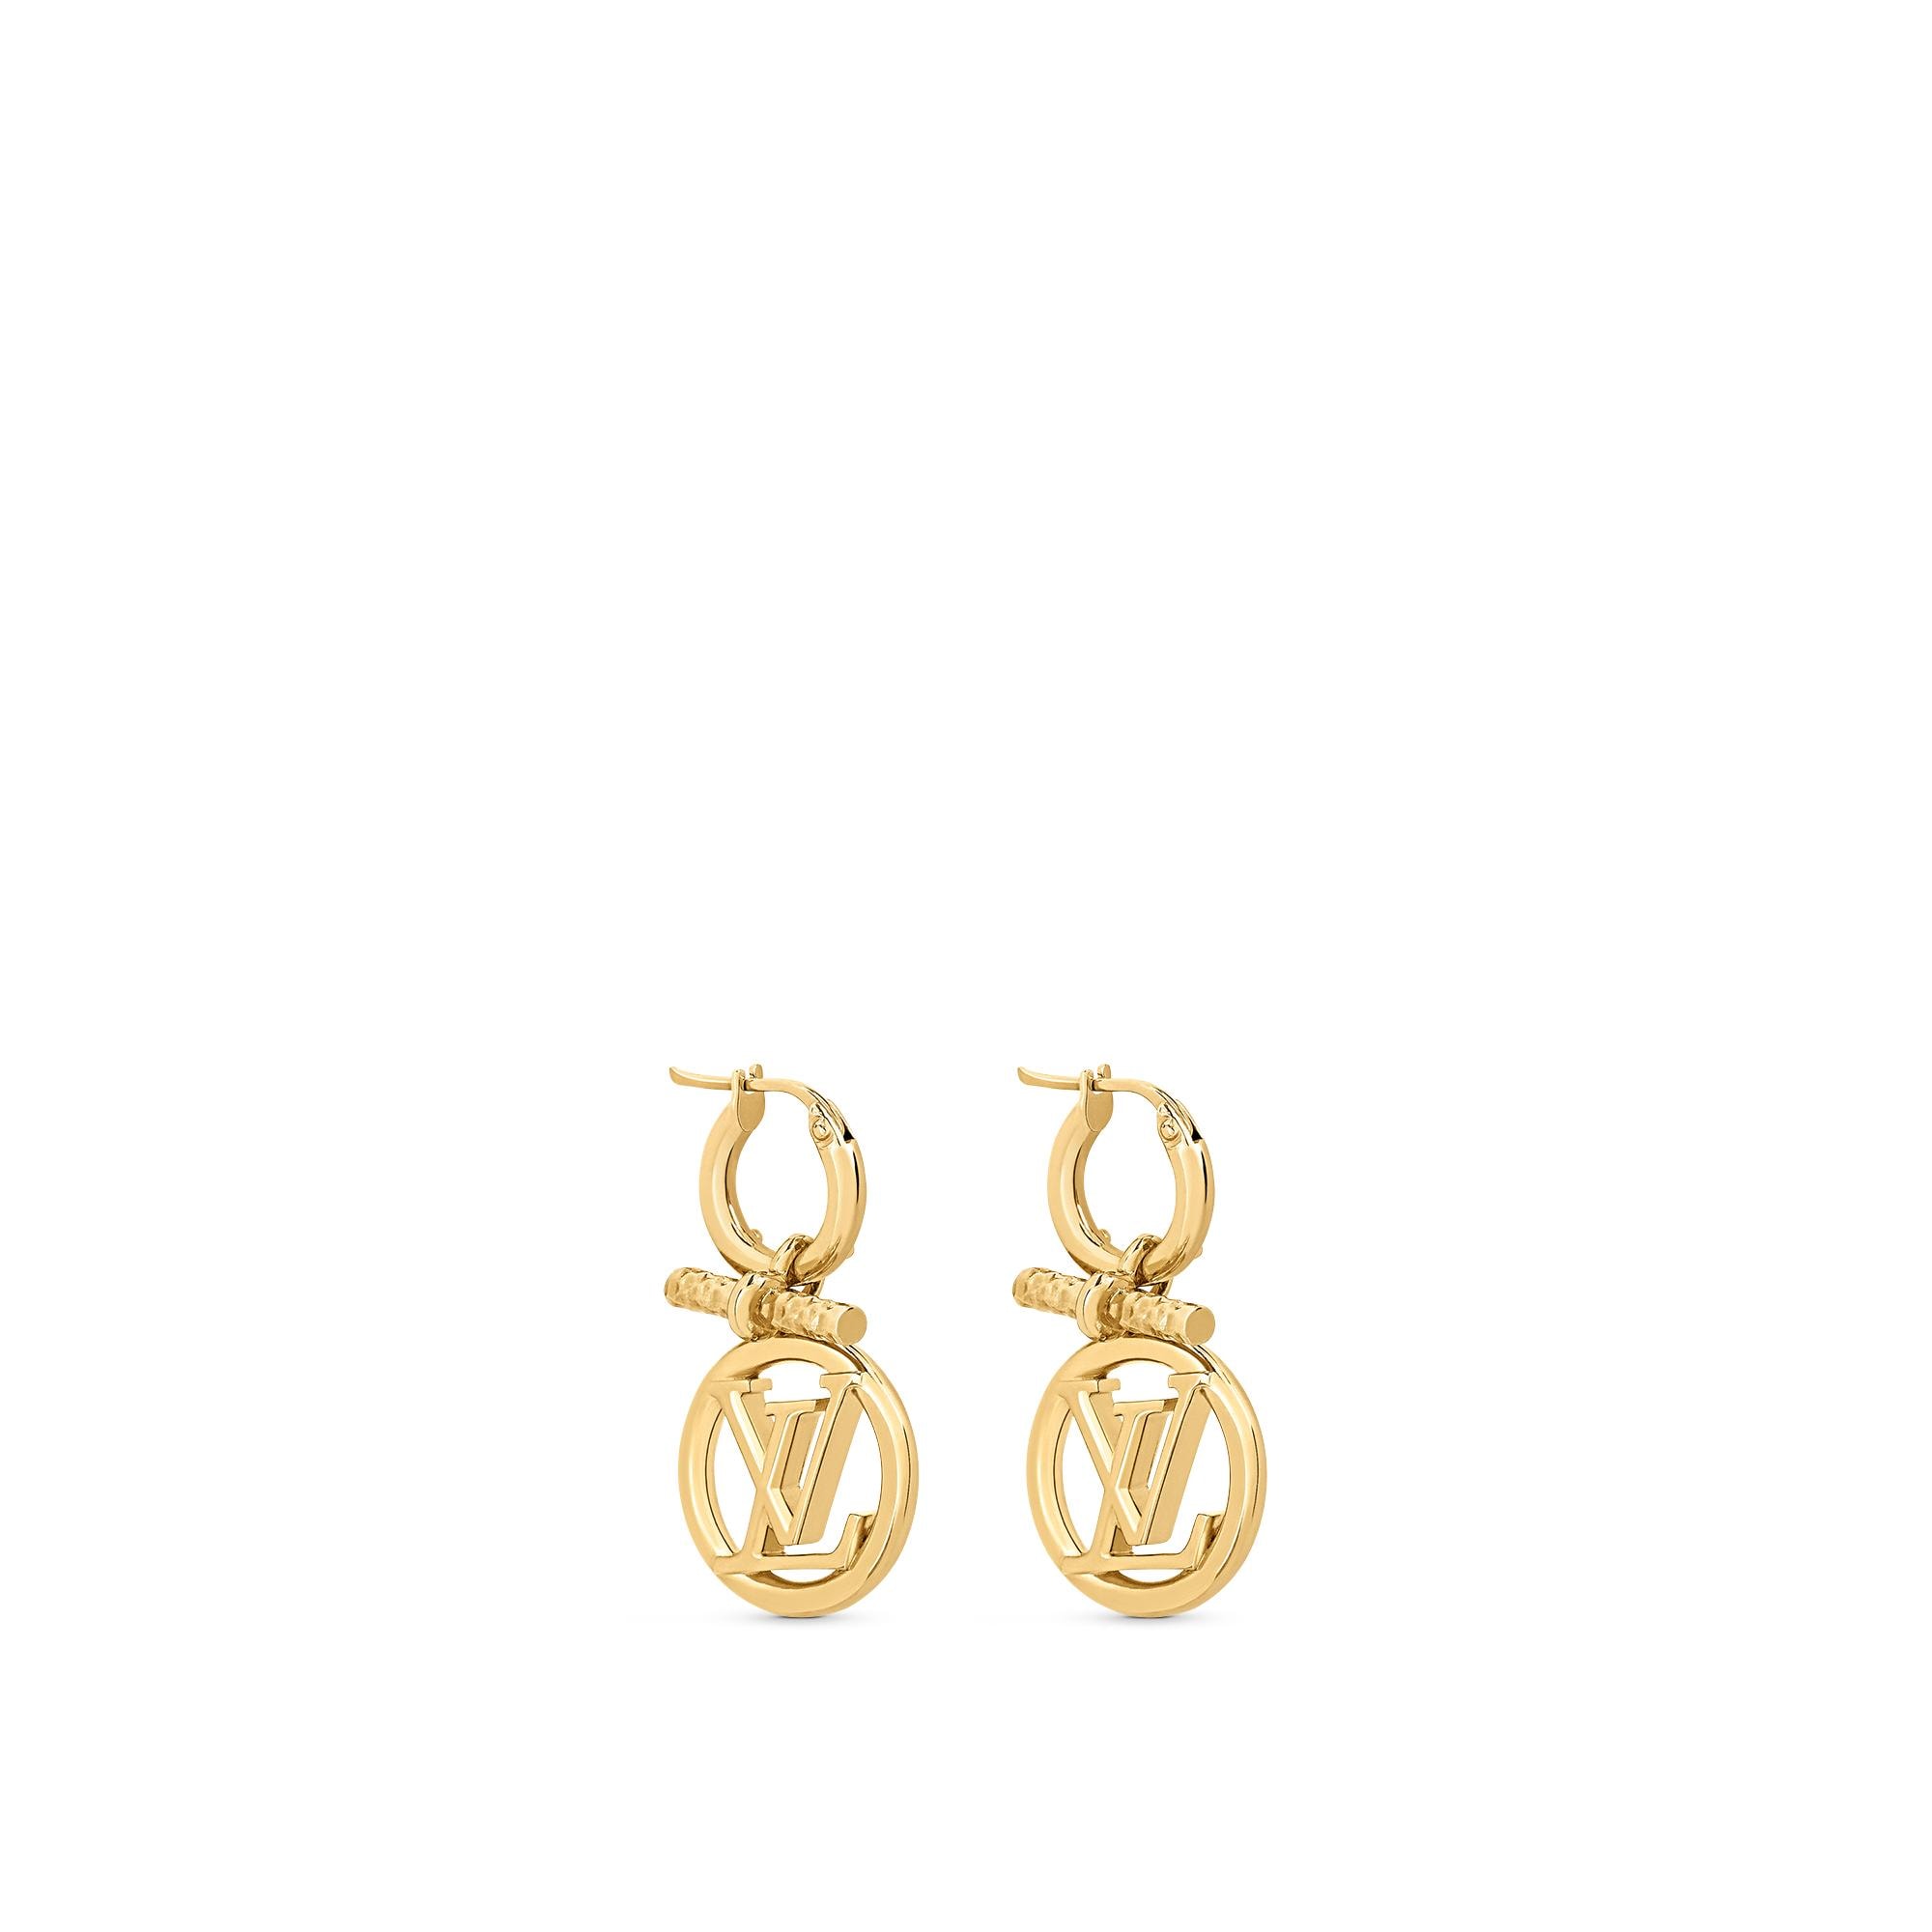 Nanogram Earrings S00 - Fashion Jewellery M00397